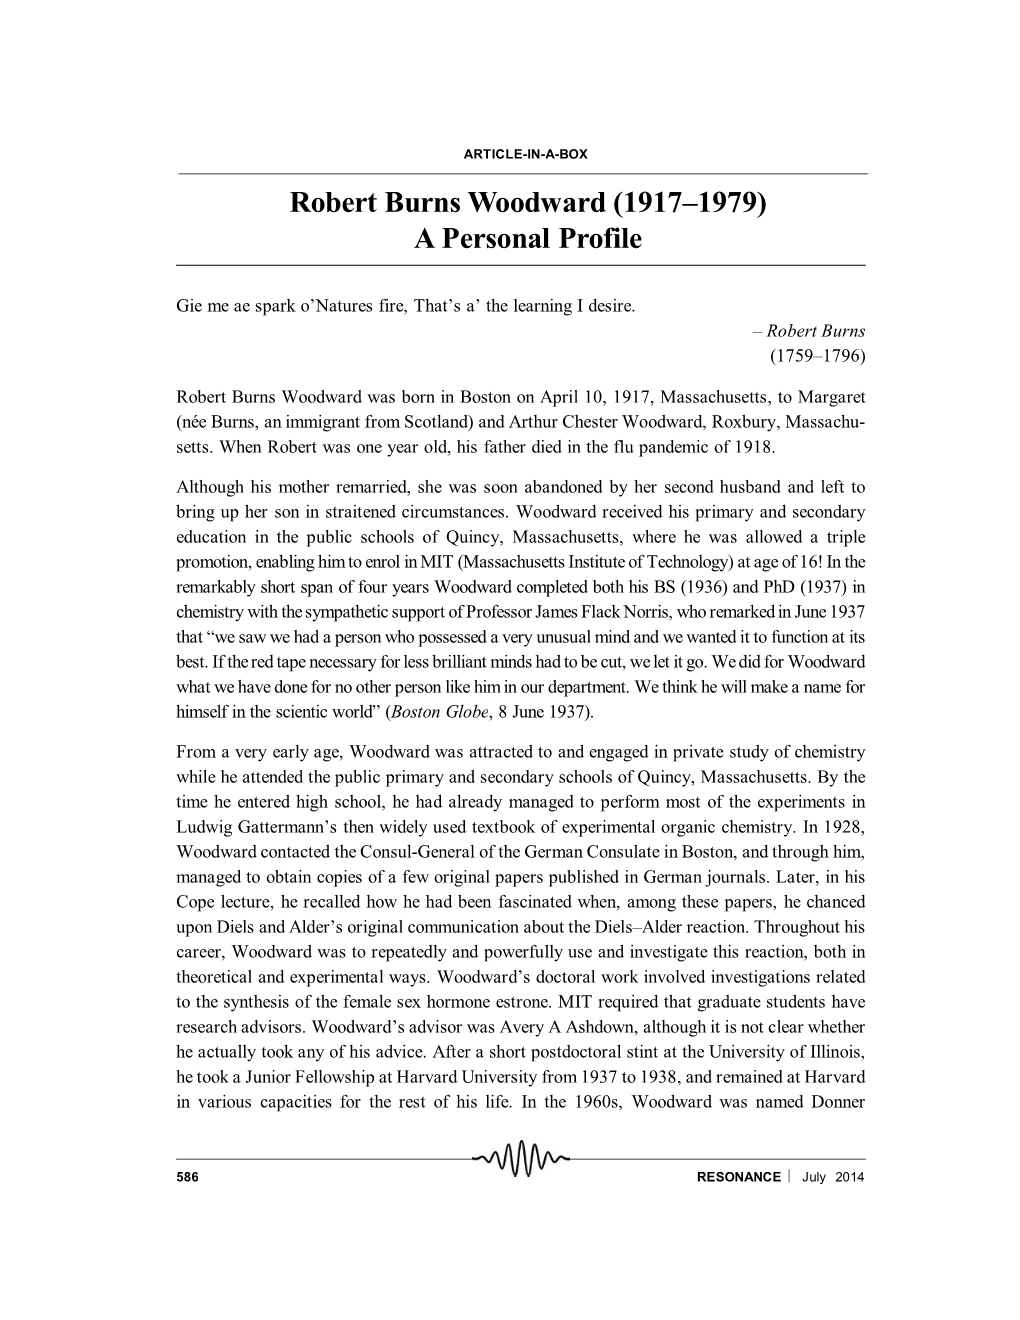 Robert Burns Woodward (1917–1979) a Personal Profile